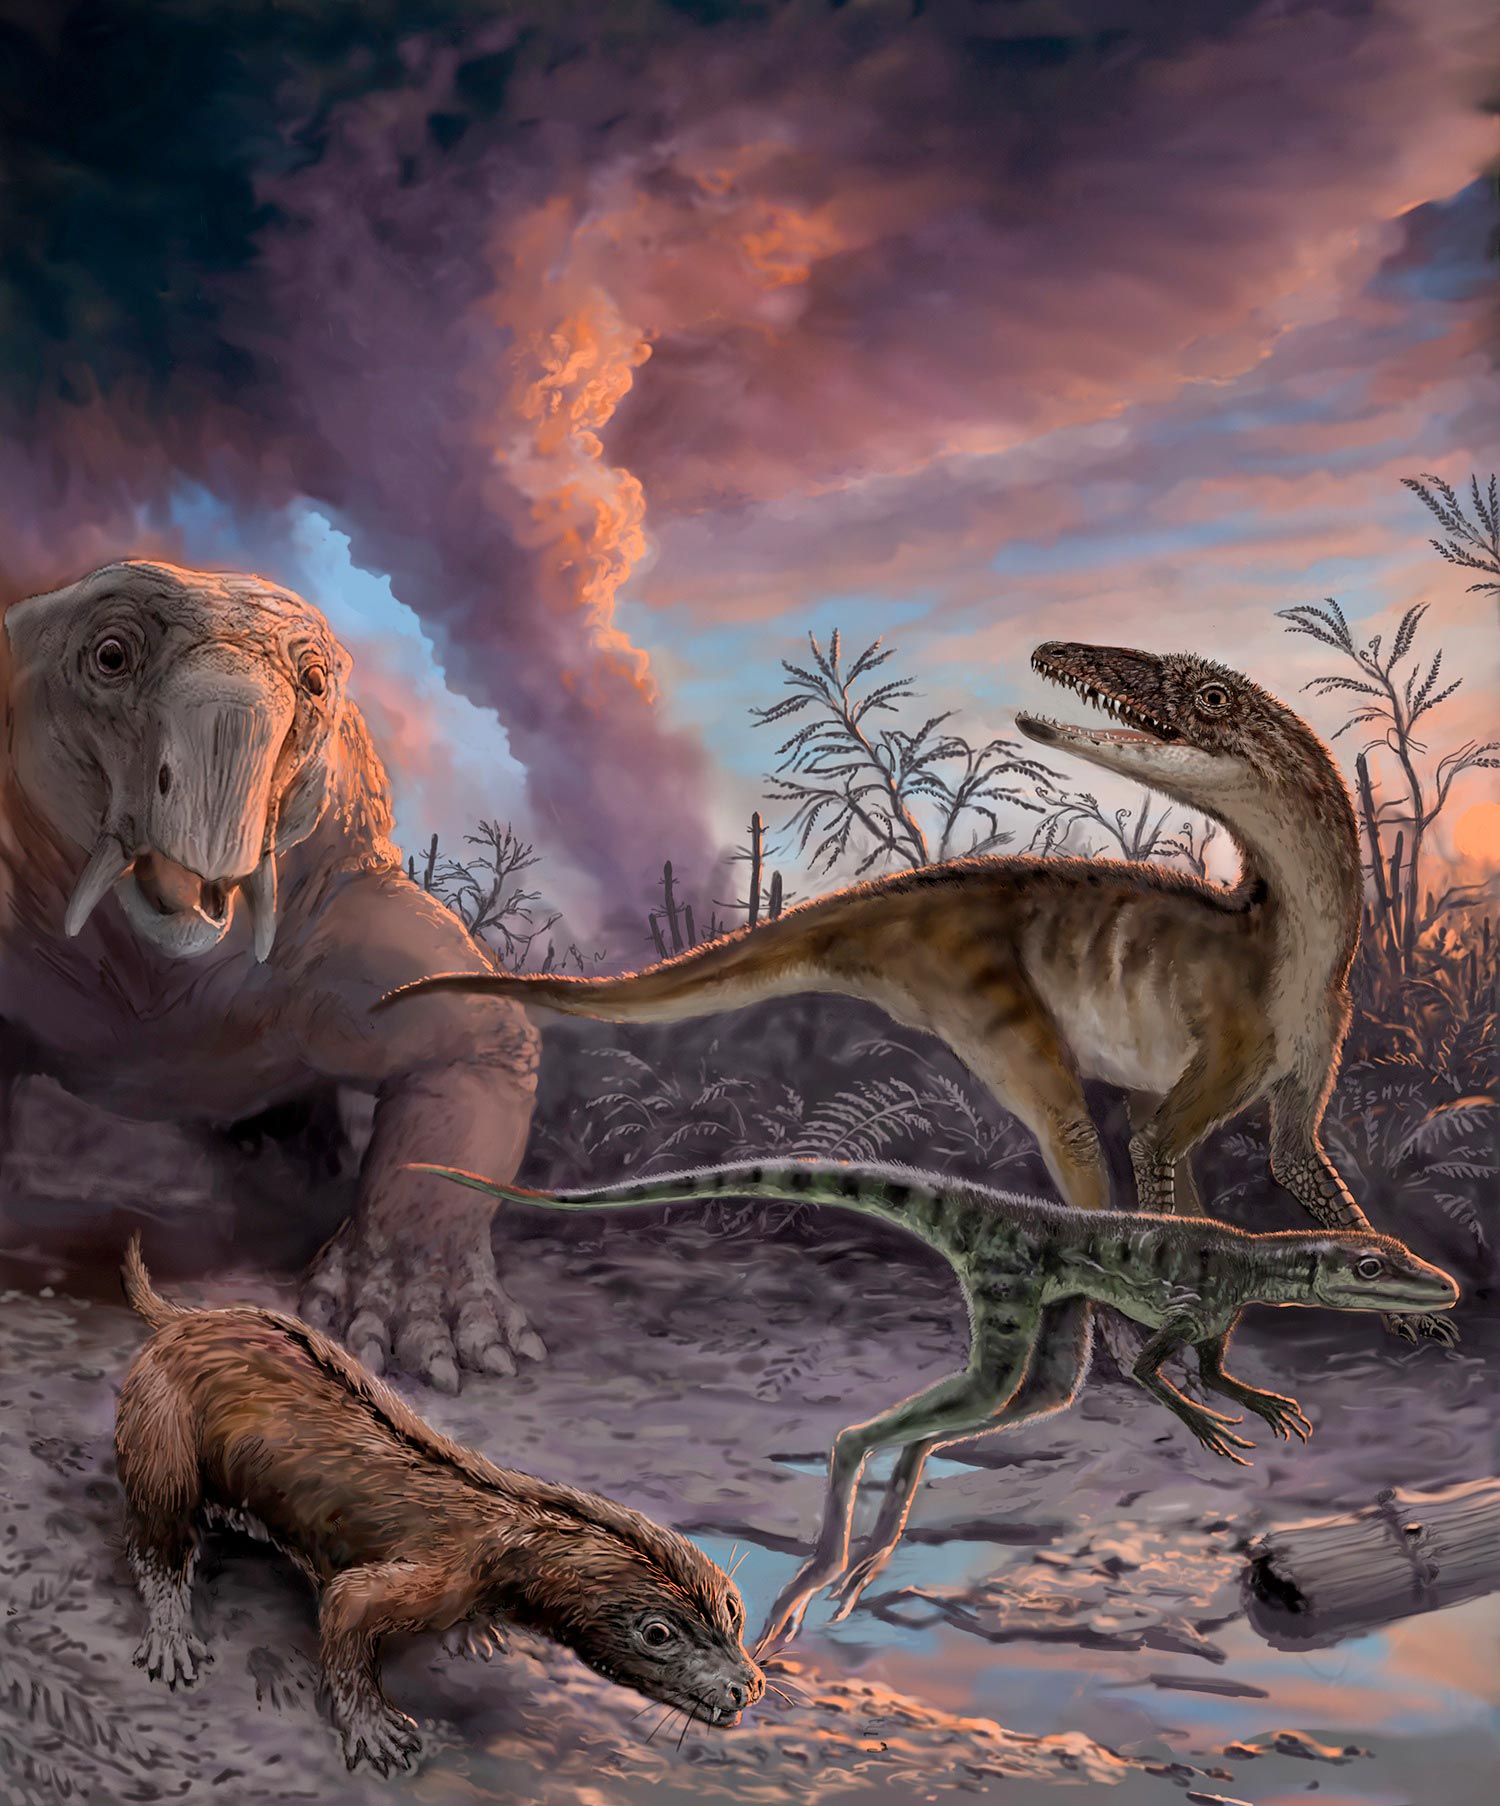 Scientists Discover New Species of Giant Dinosaur - Ledumahadi Mafube